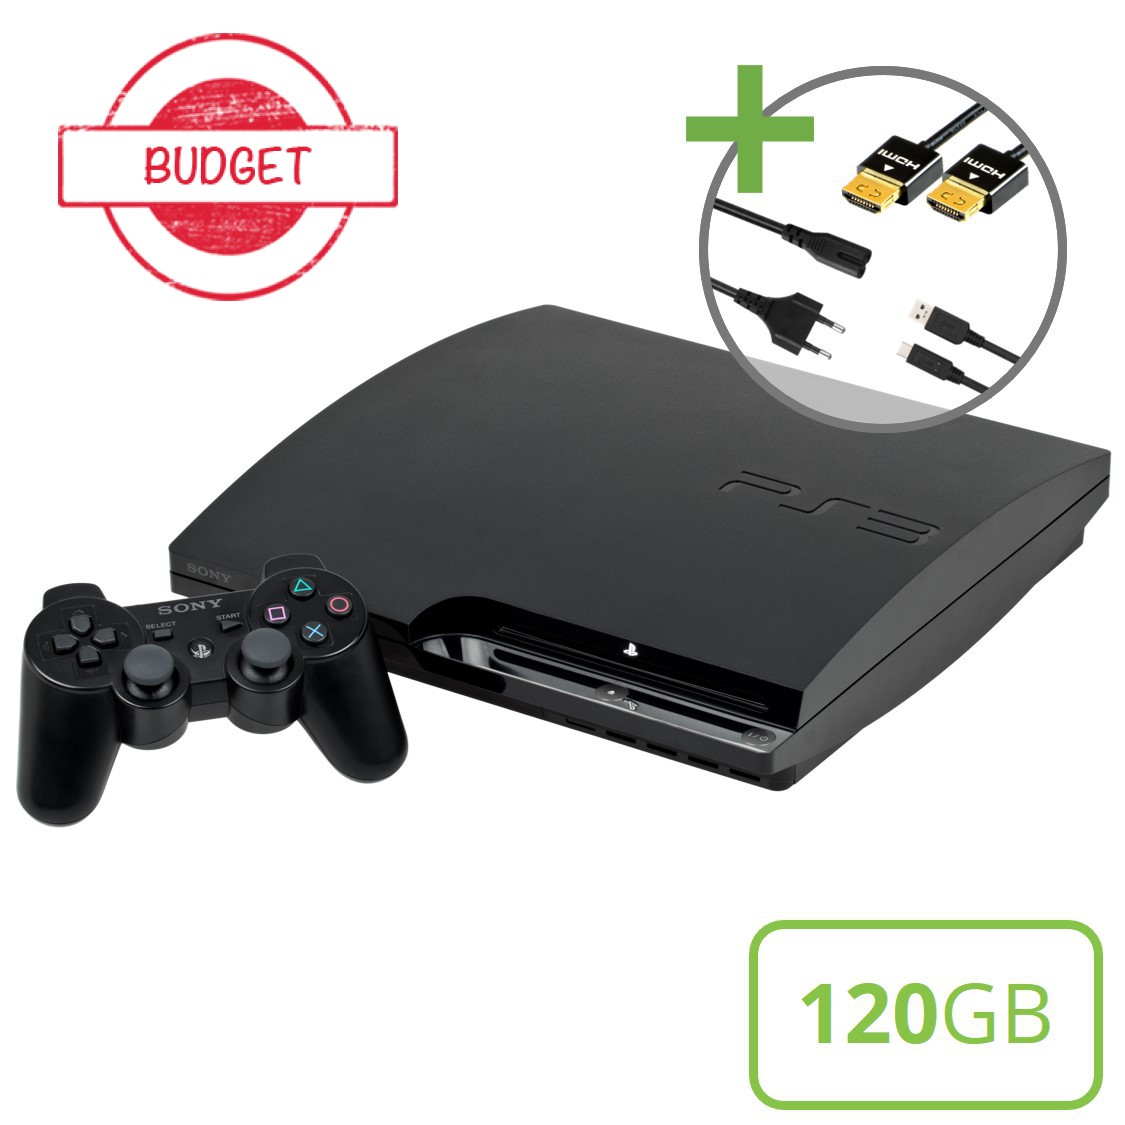 Sony PlayStation 3 Slim (120GB) Starter Pack - DualShock Edition - Budget Kopen | Playstation 3 Hardware